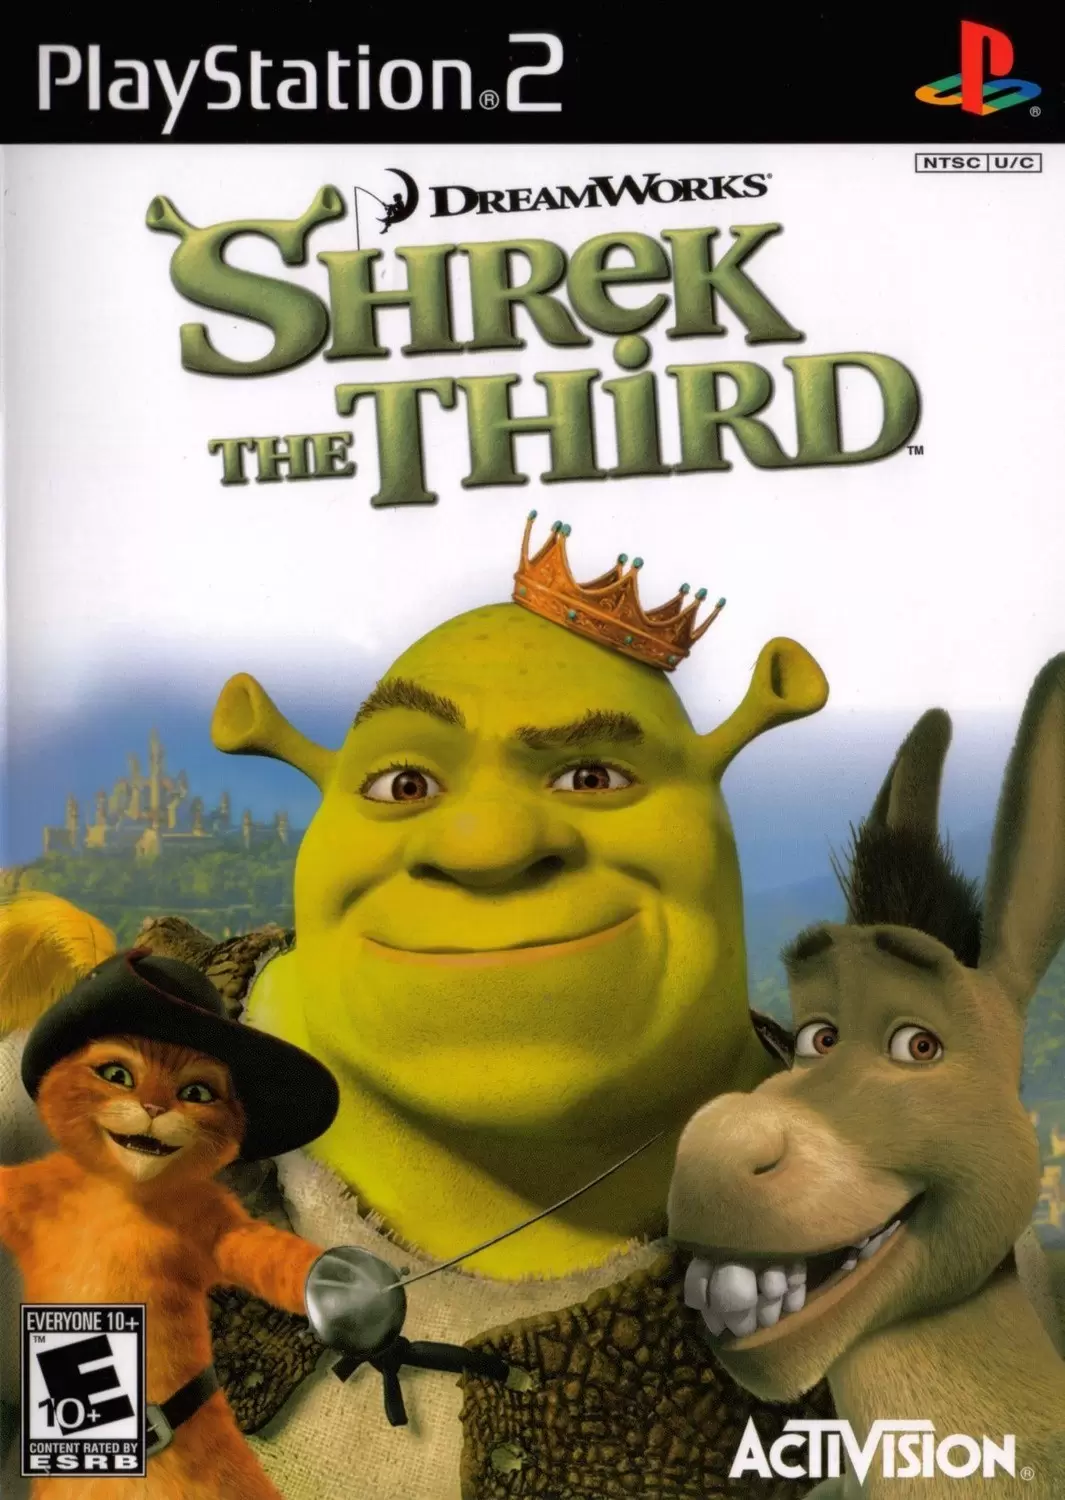 PS2 Games - Shrek the Third